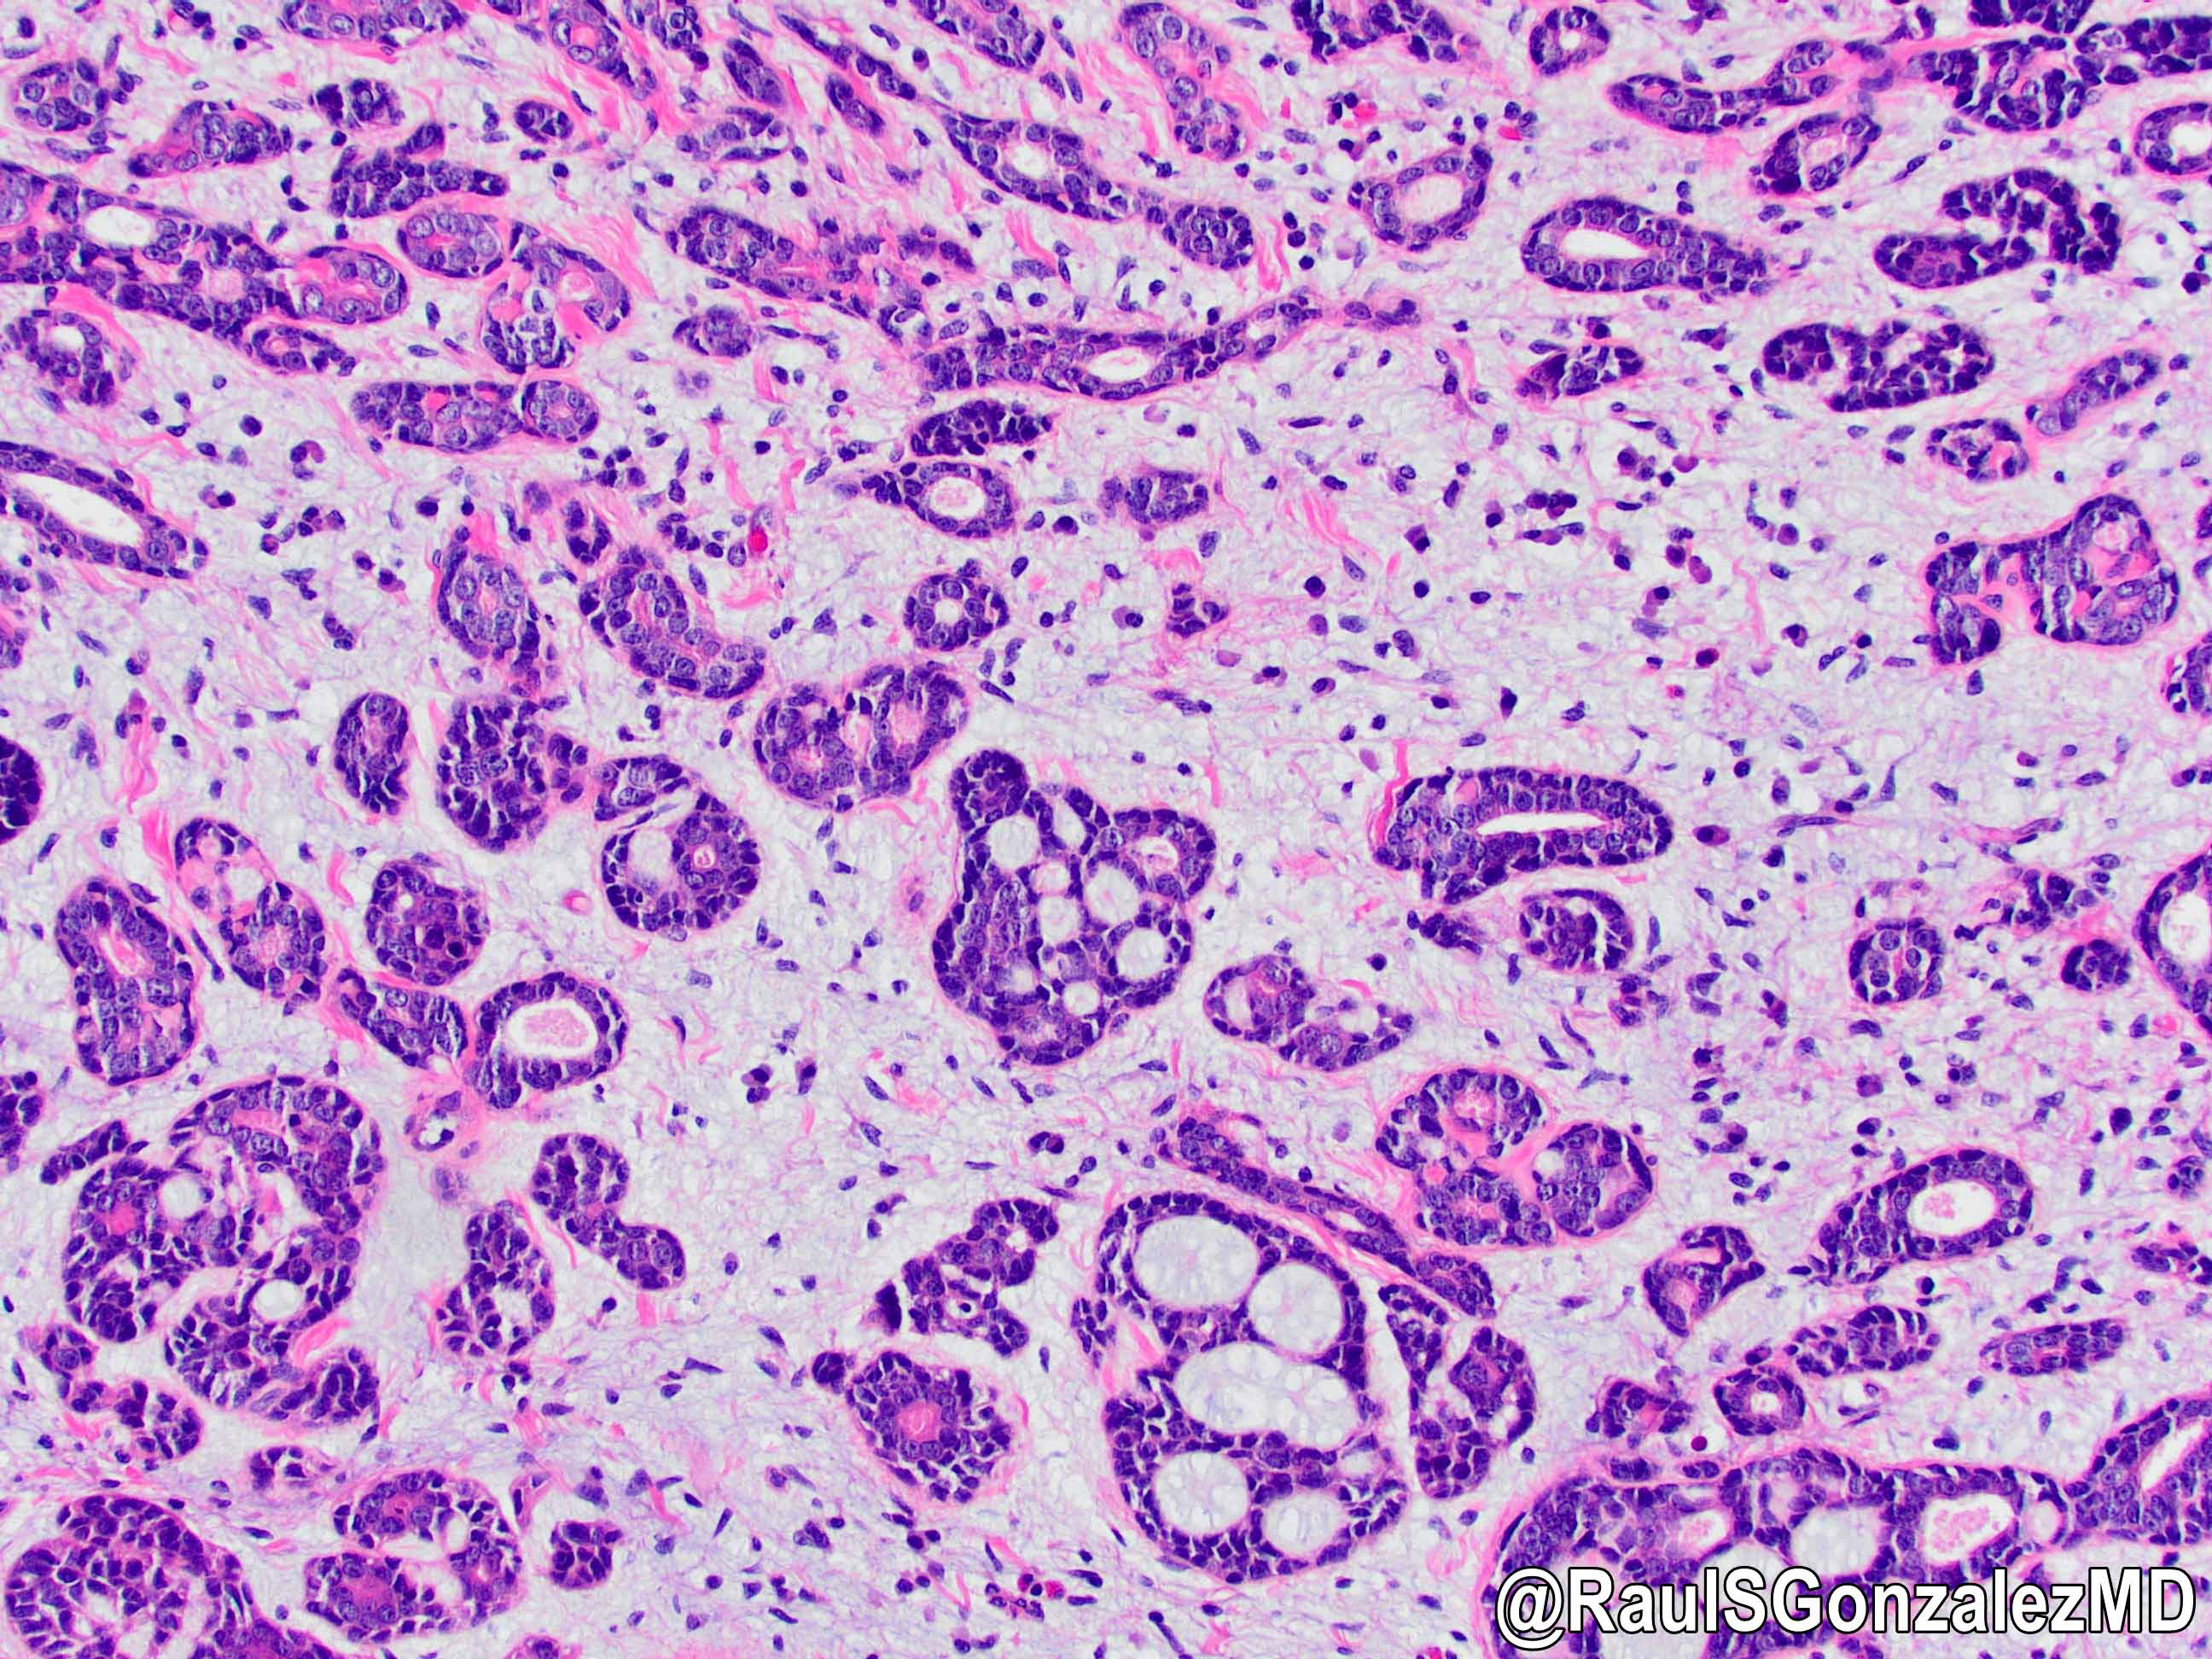 Adenoid cystic carcinoma